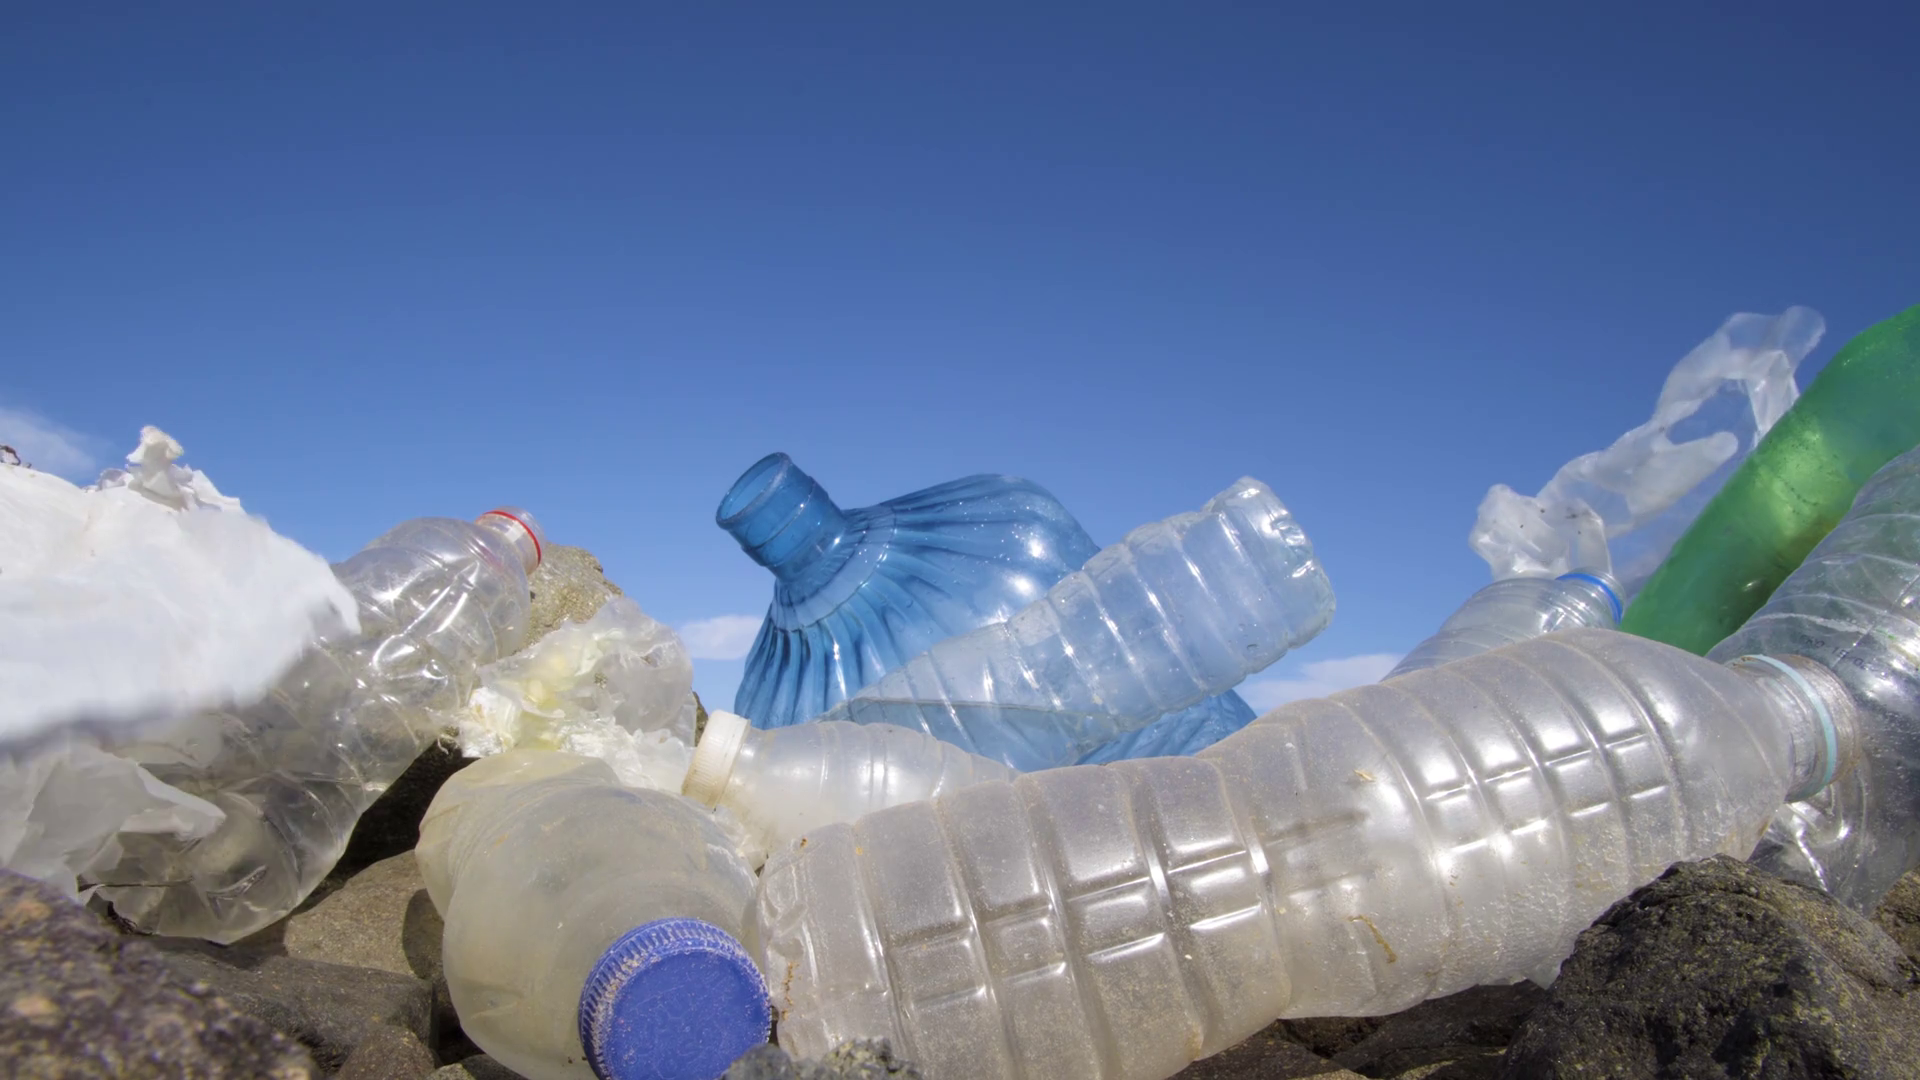 videoblocks-dirty-plastic-bottles-on-the-stone-beach-environmental-pollution_rdsvu0wxe_thumbnail-1080_01